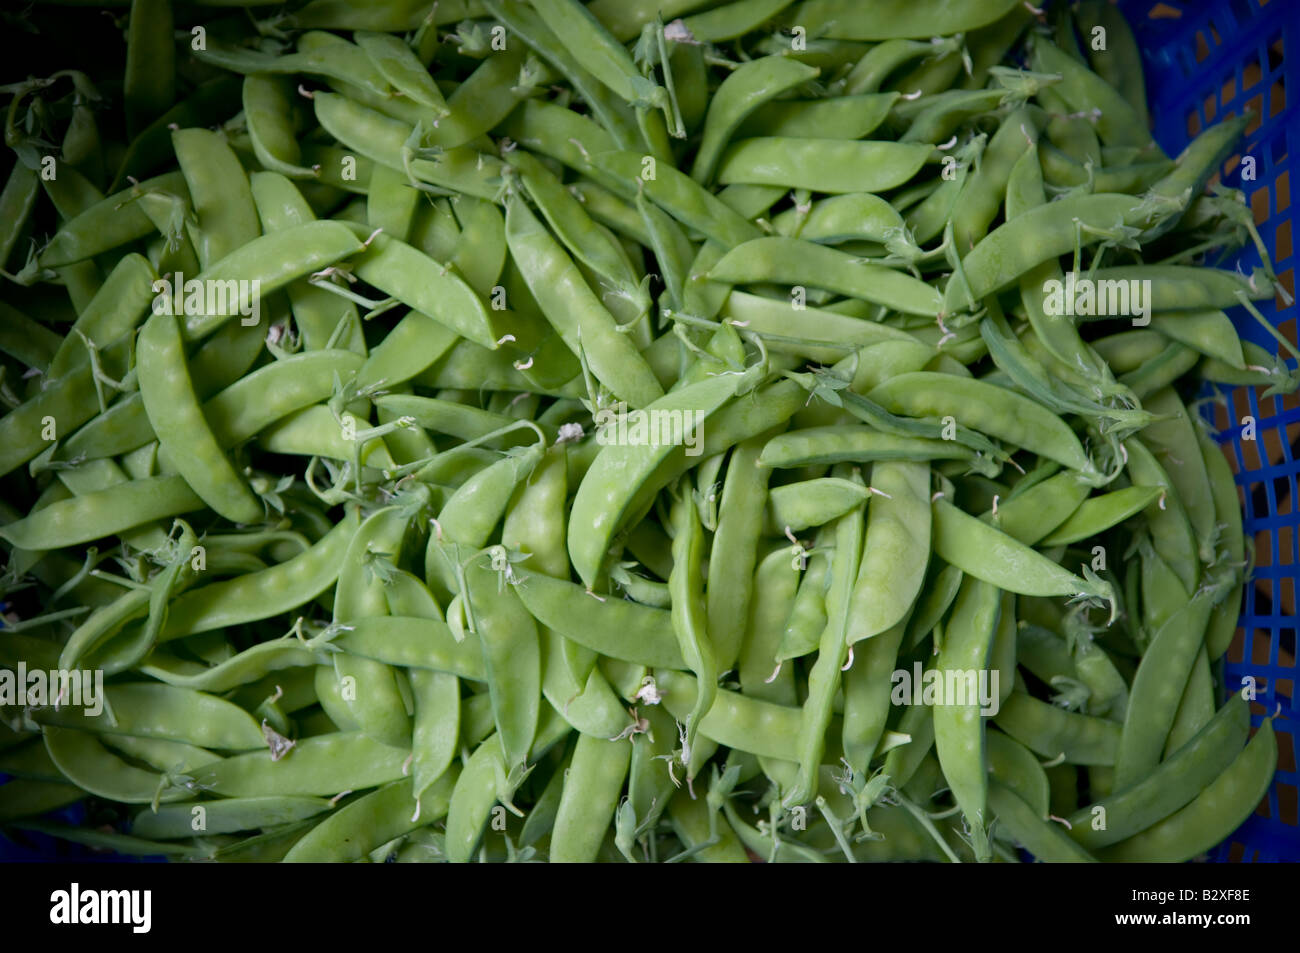 box of green sugar snap peas, fresh vegetables Stock Photo